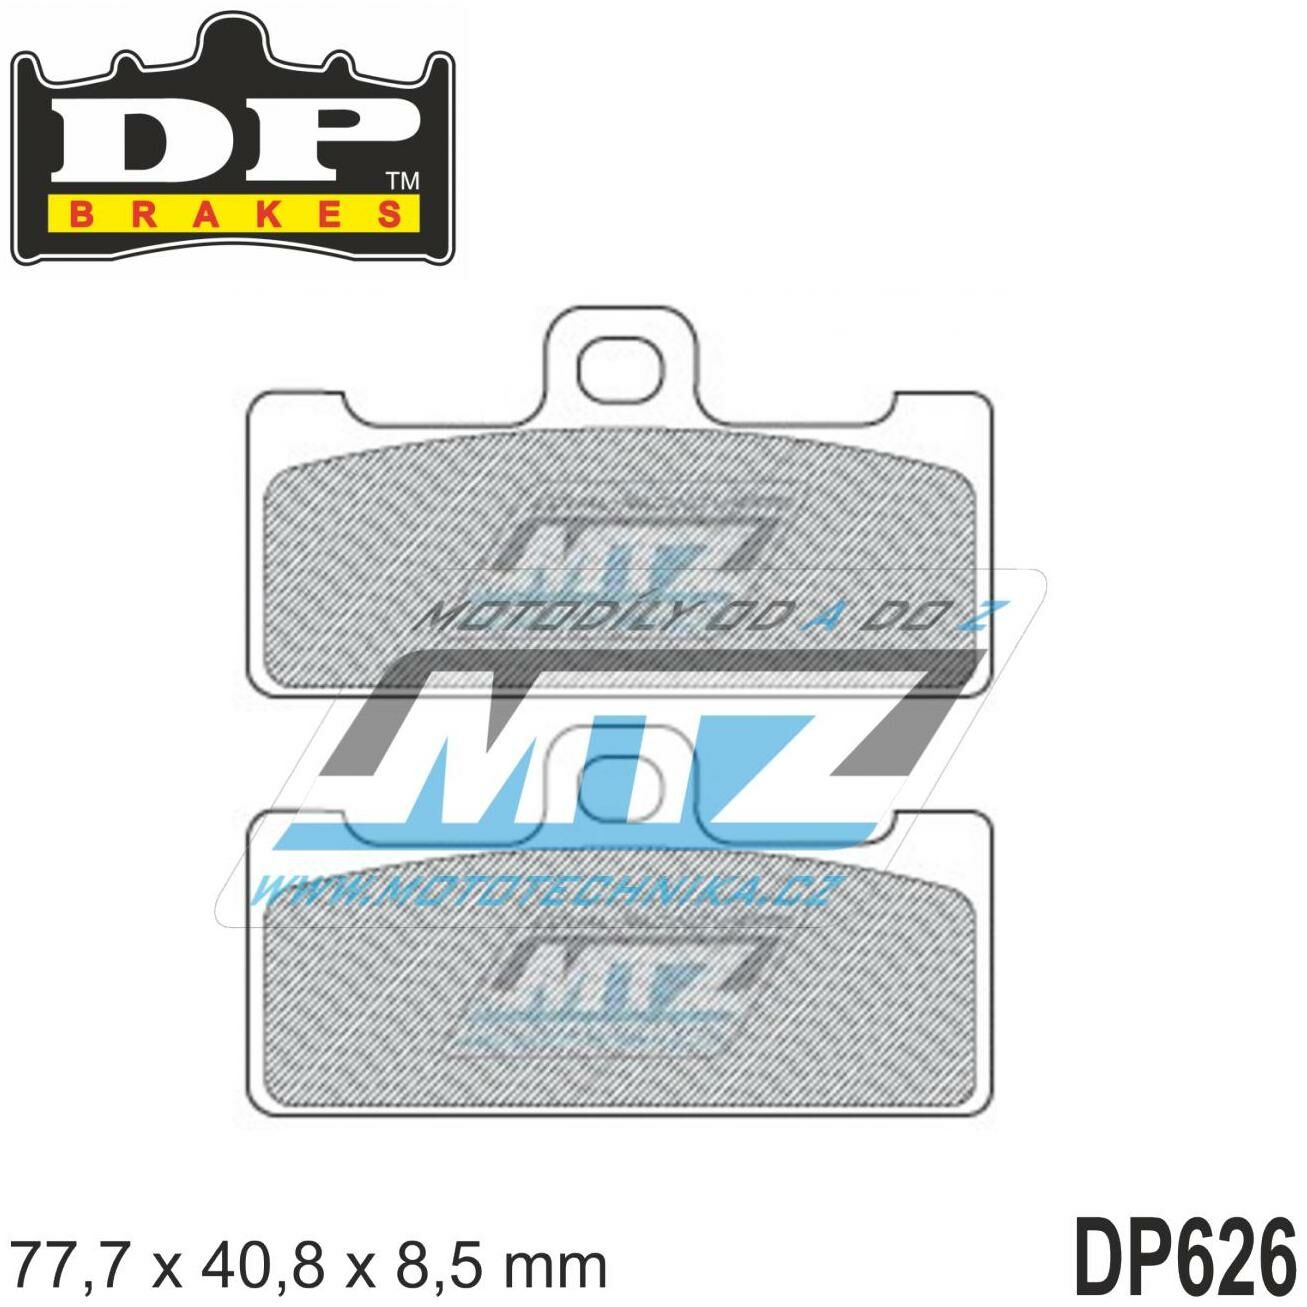 Obrázek produktu Destičky brzdové DP626-RDP DP Brakes - směs RDP X-RACE Titanium DP626-RDP